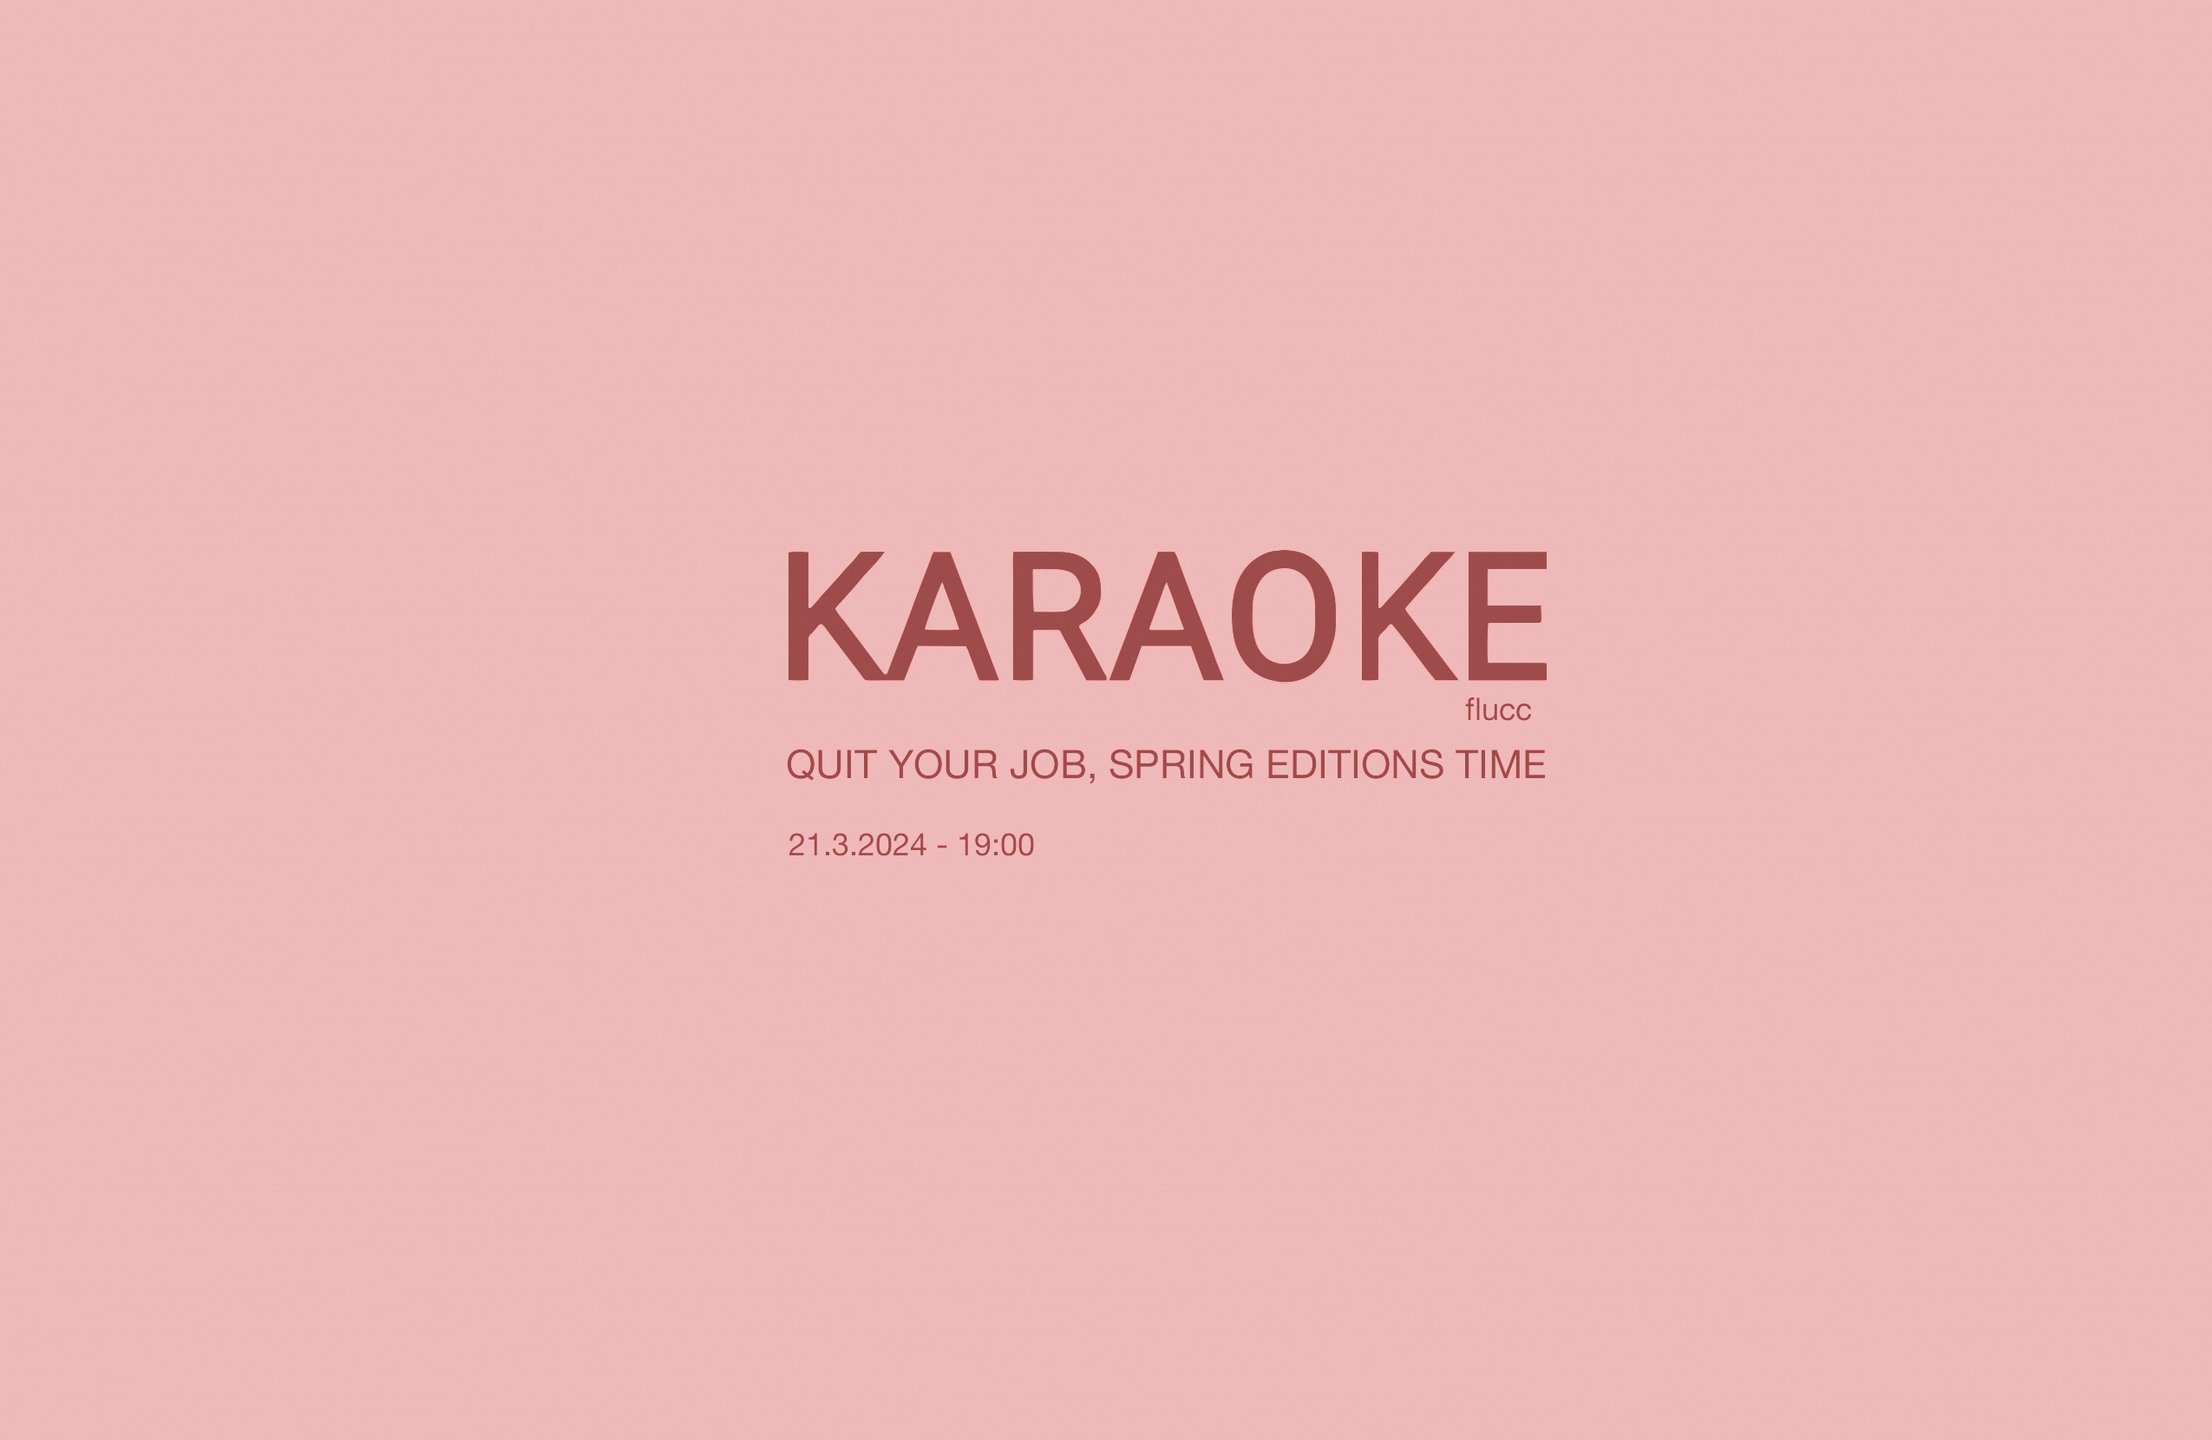 Karaoke FLUCC am 21. March 2024 @ Flucc.